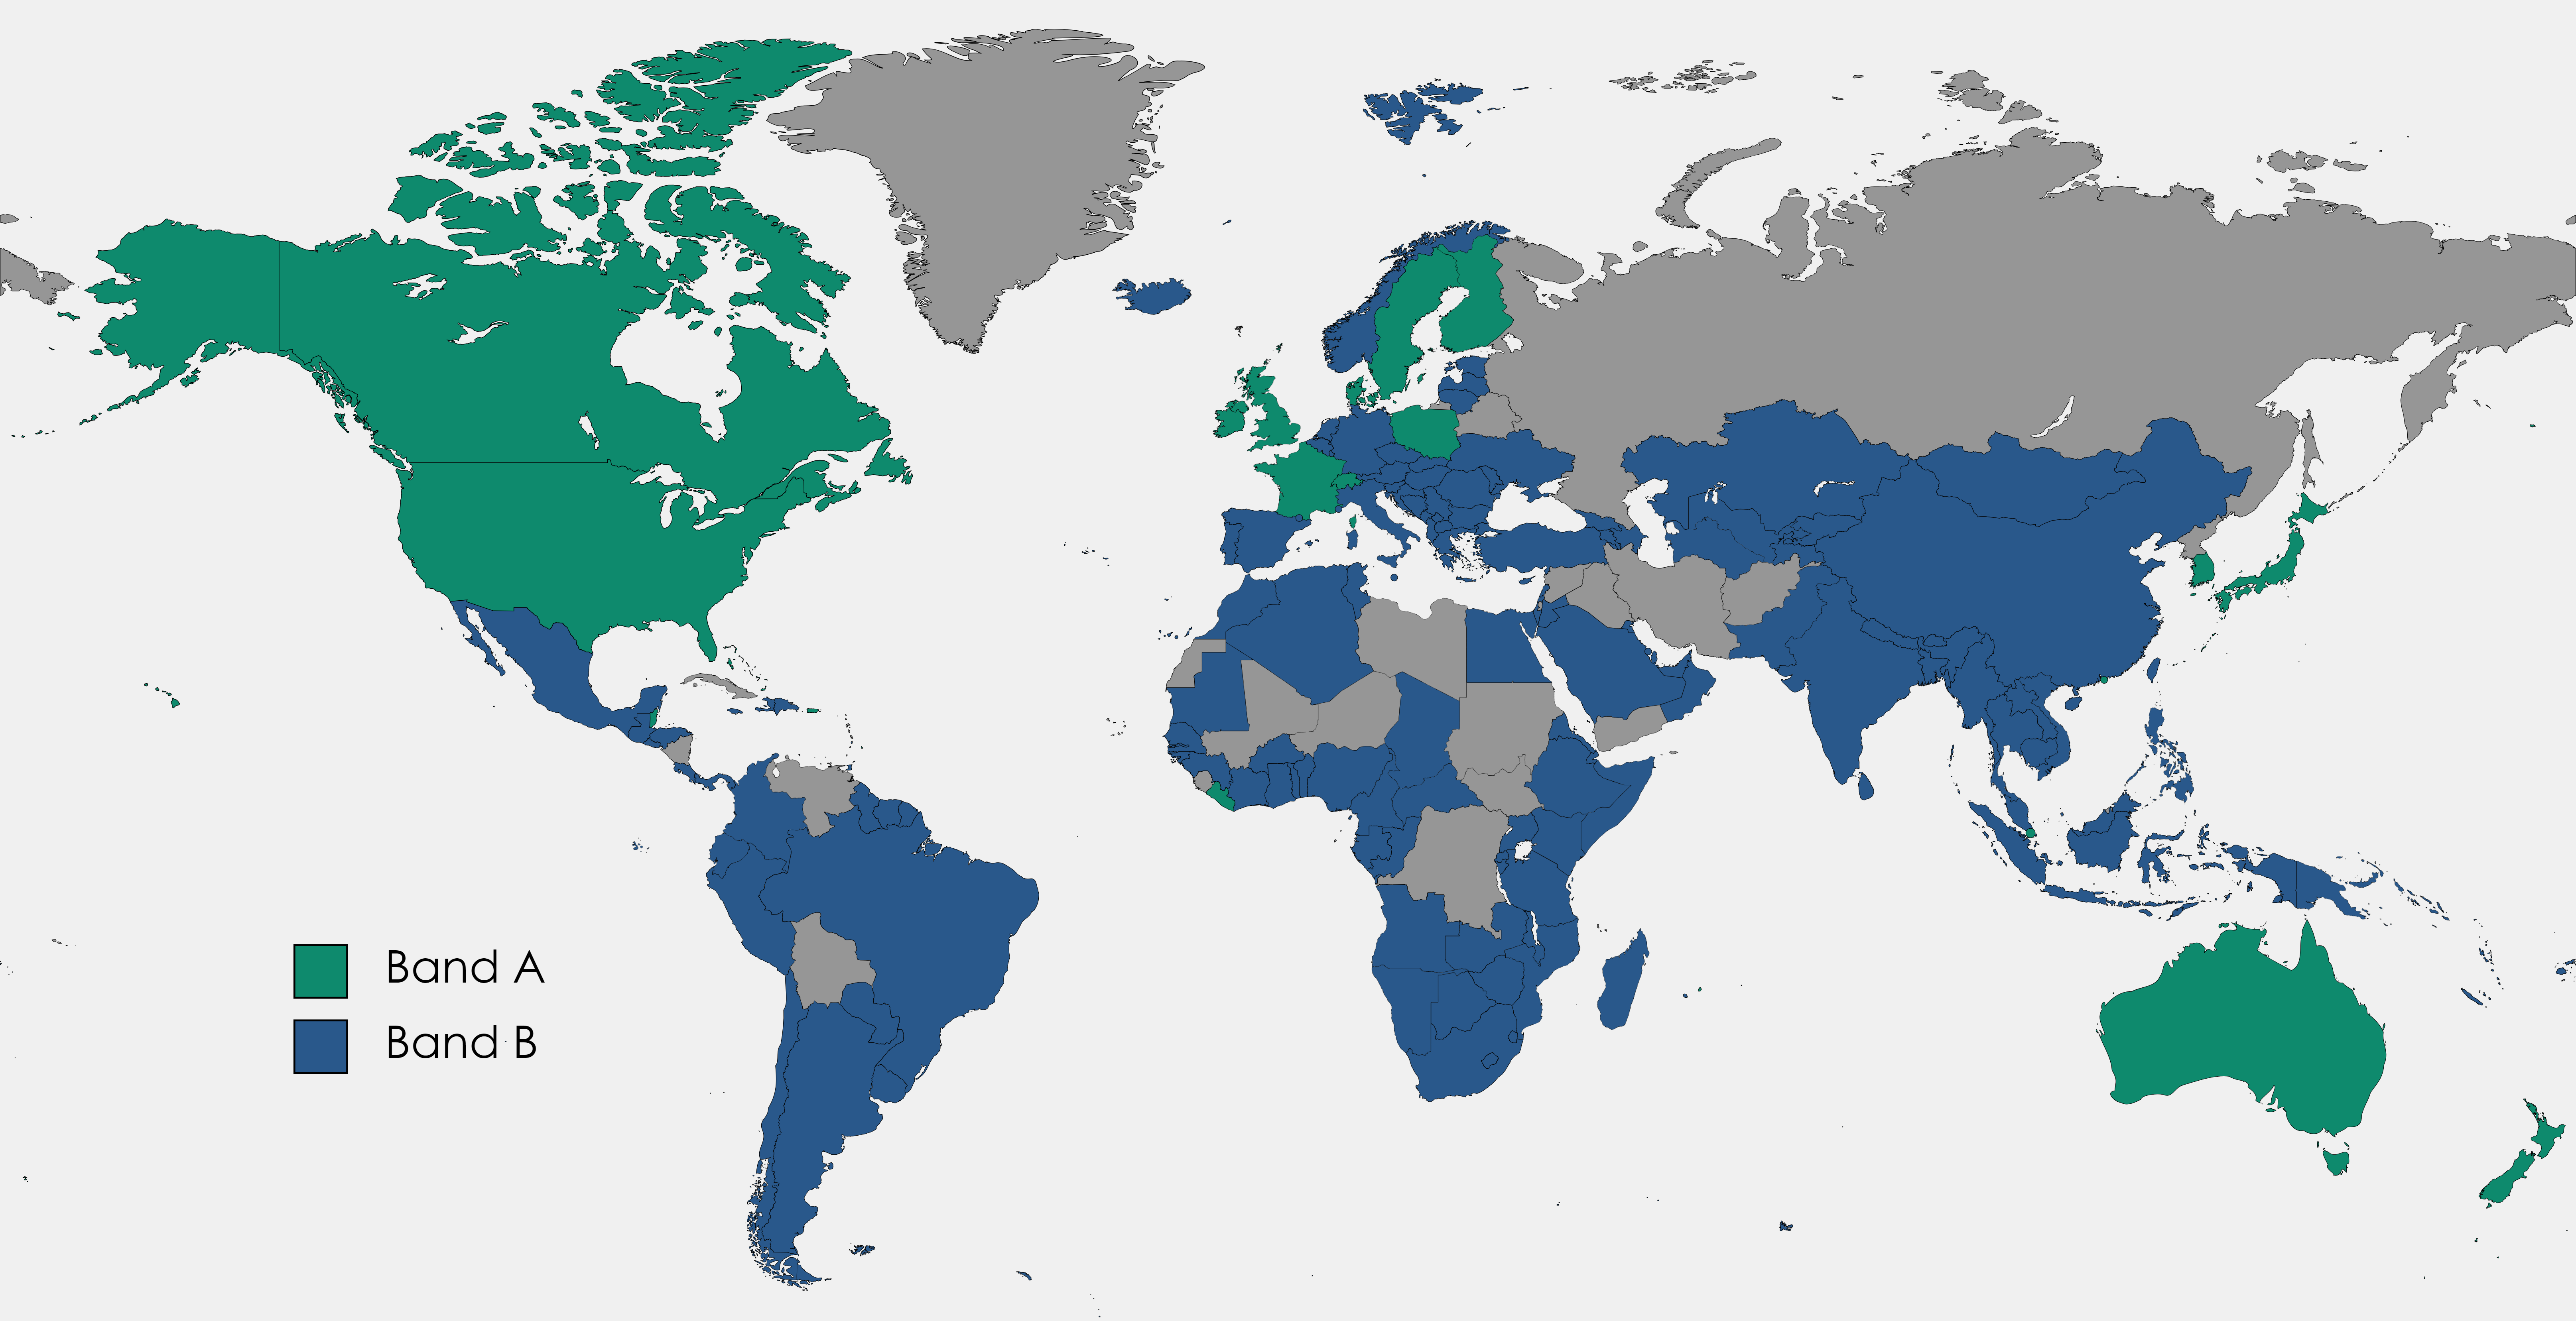 Agile Legal's Global Subsidiary Management World Map